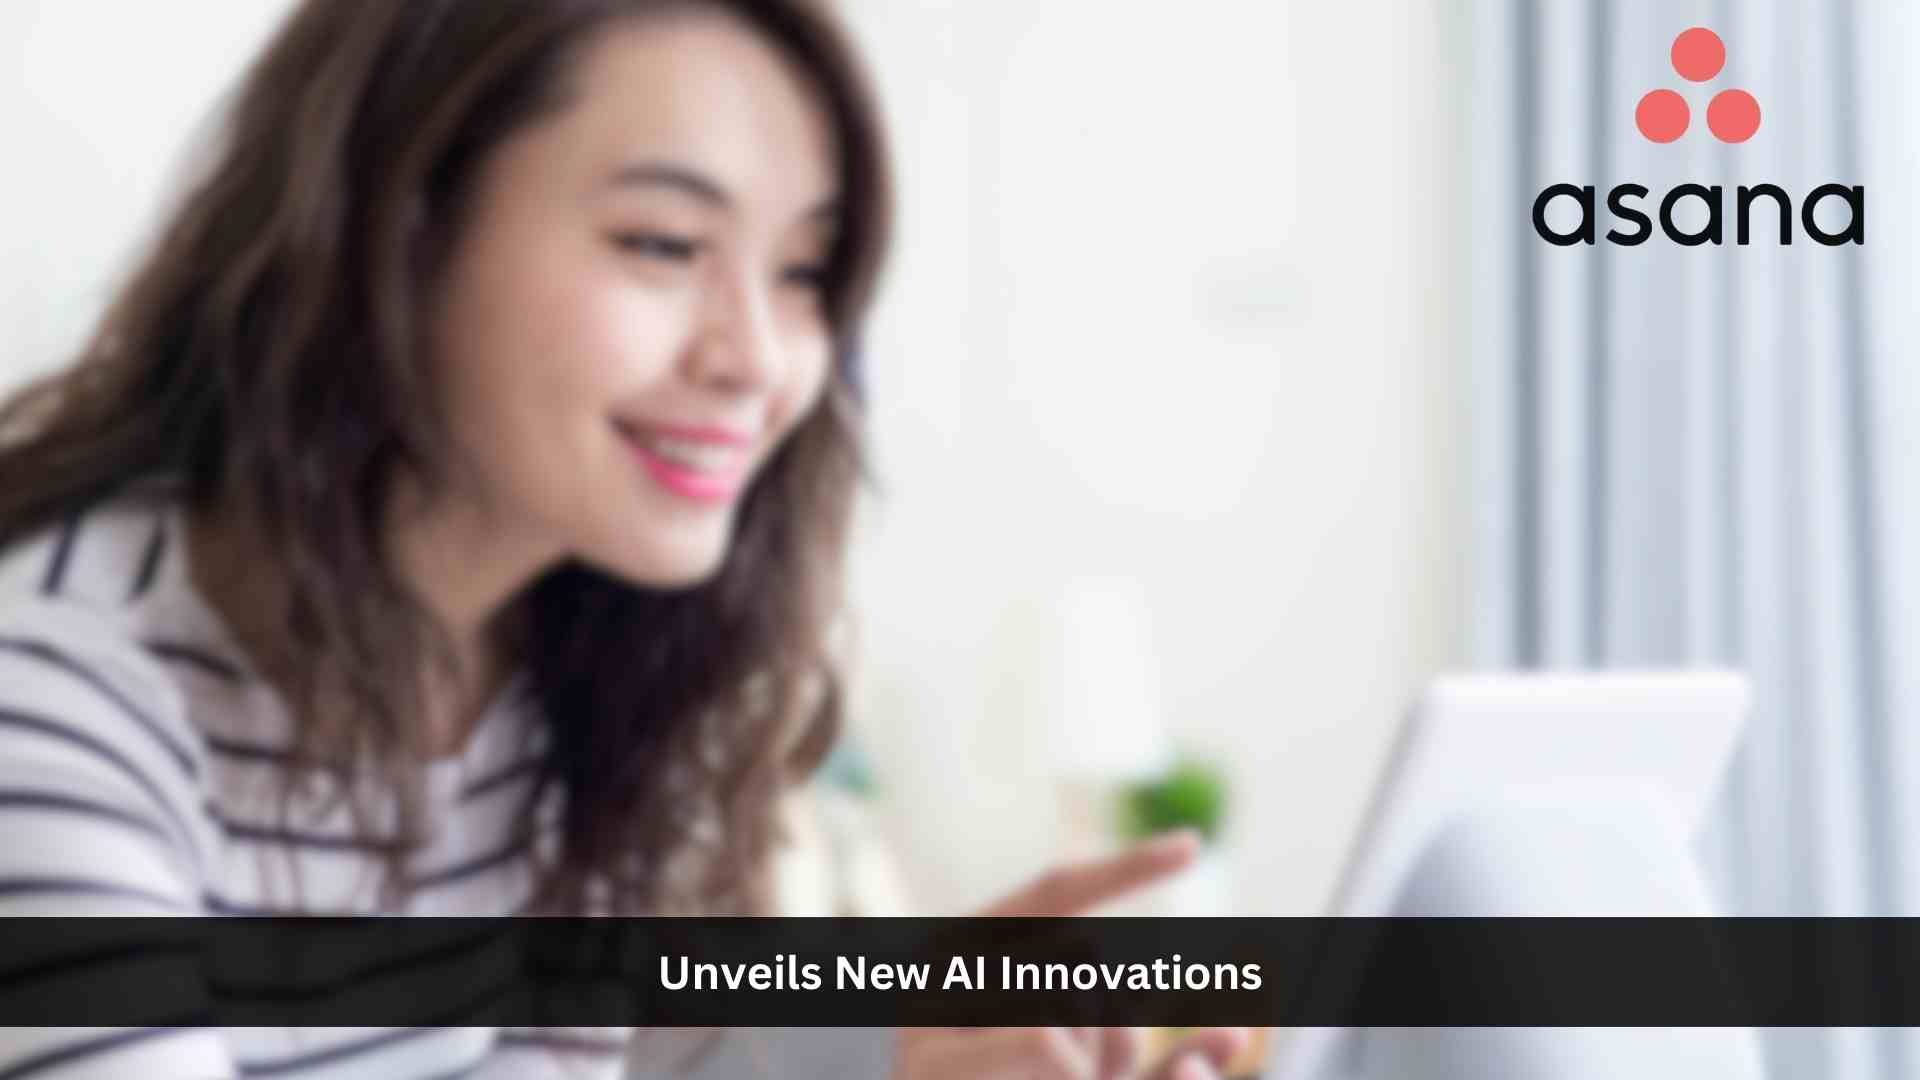 Asana Unveils New AI Innovations to Help Every Organization Work Smarter